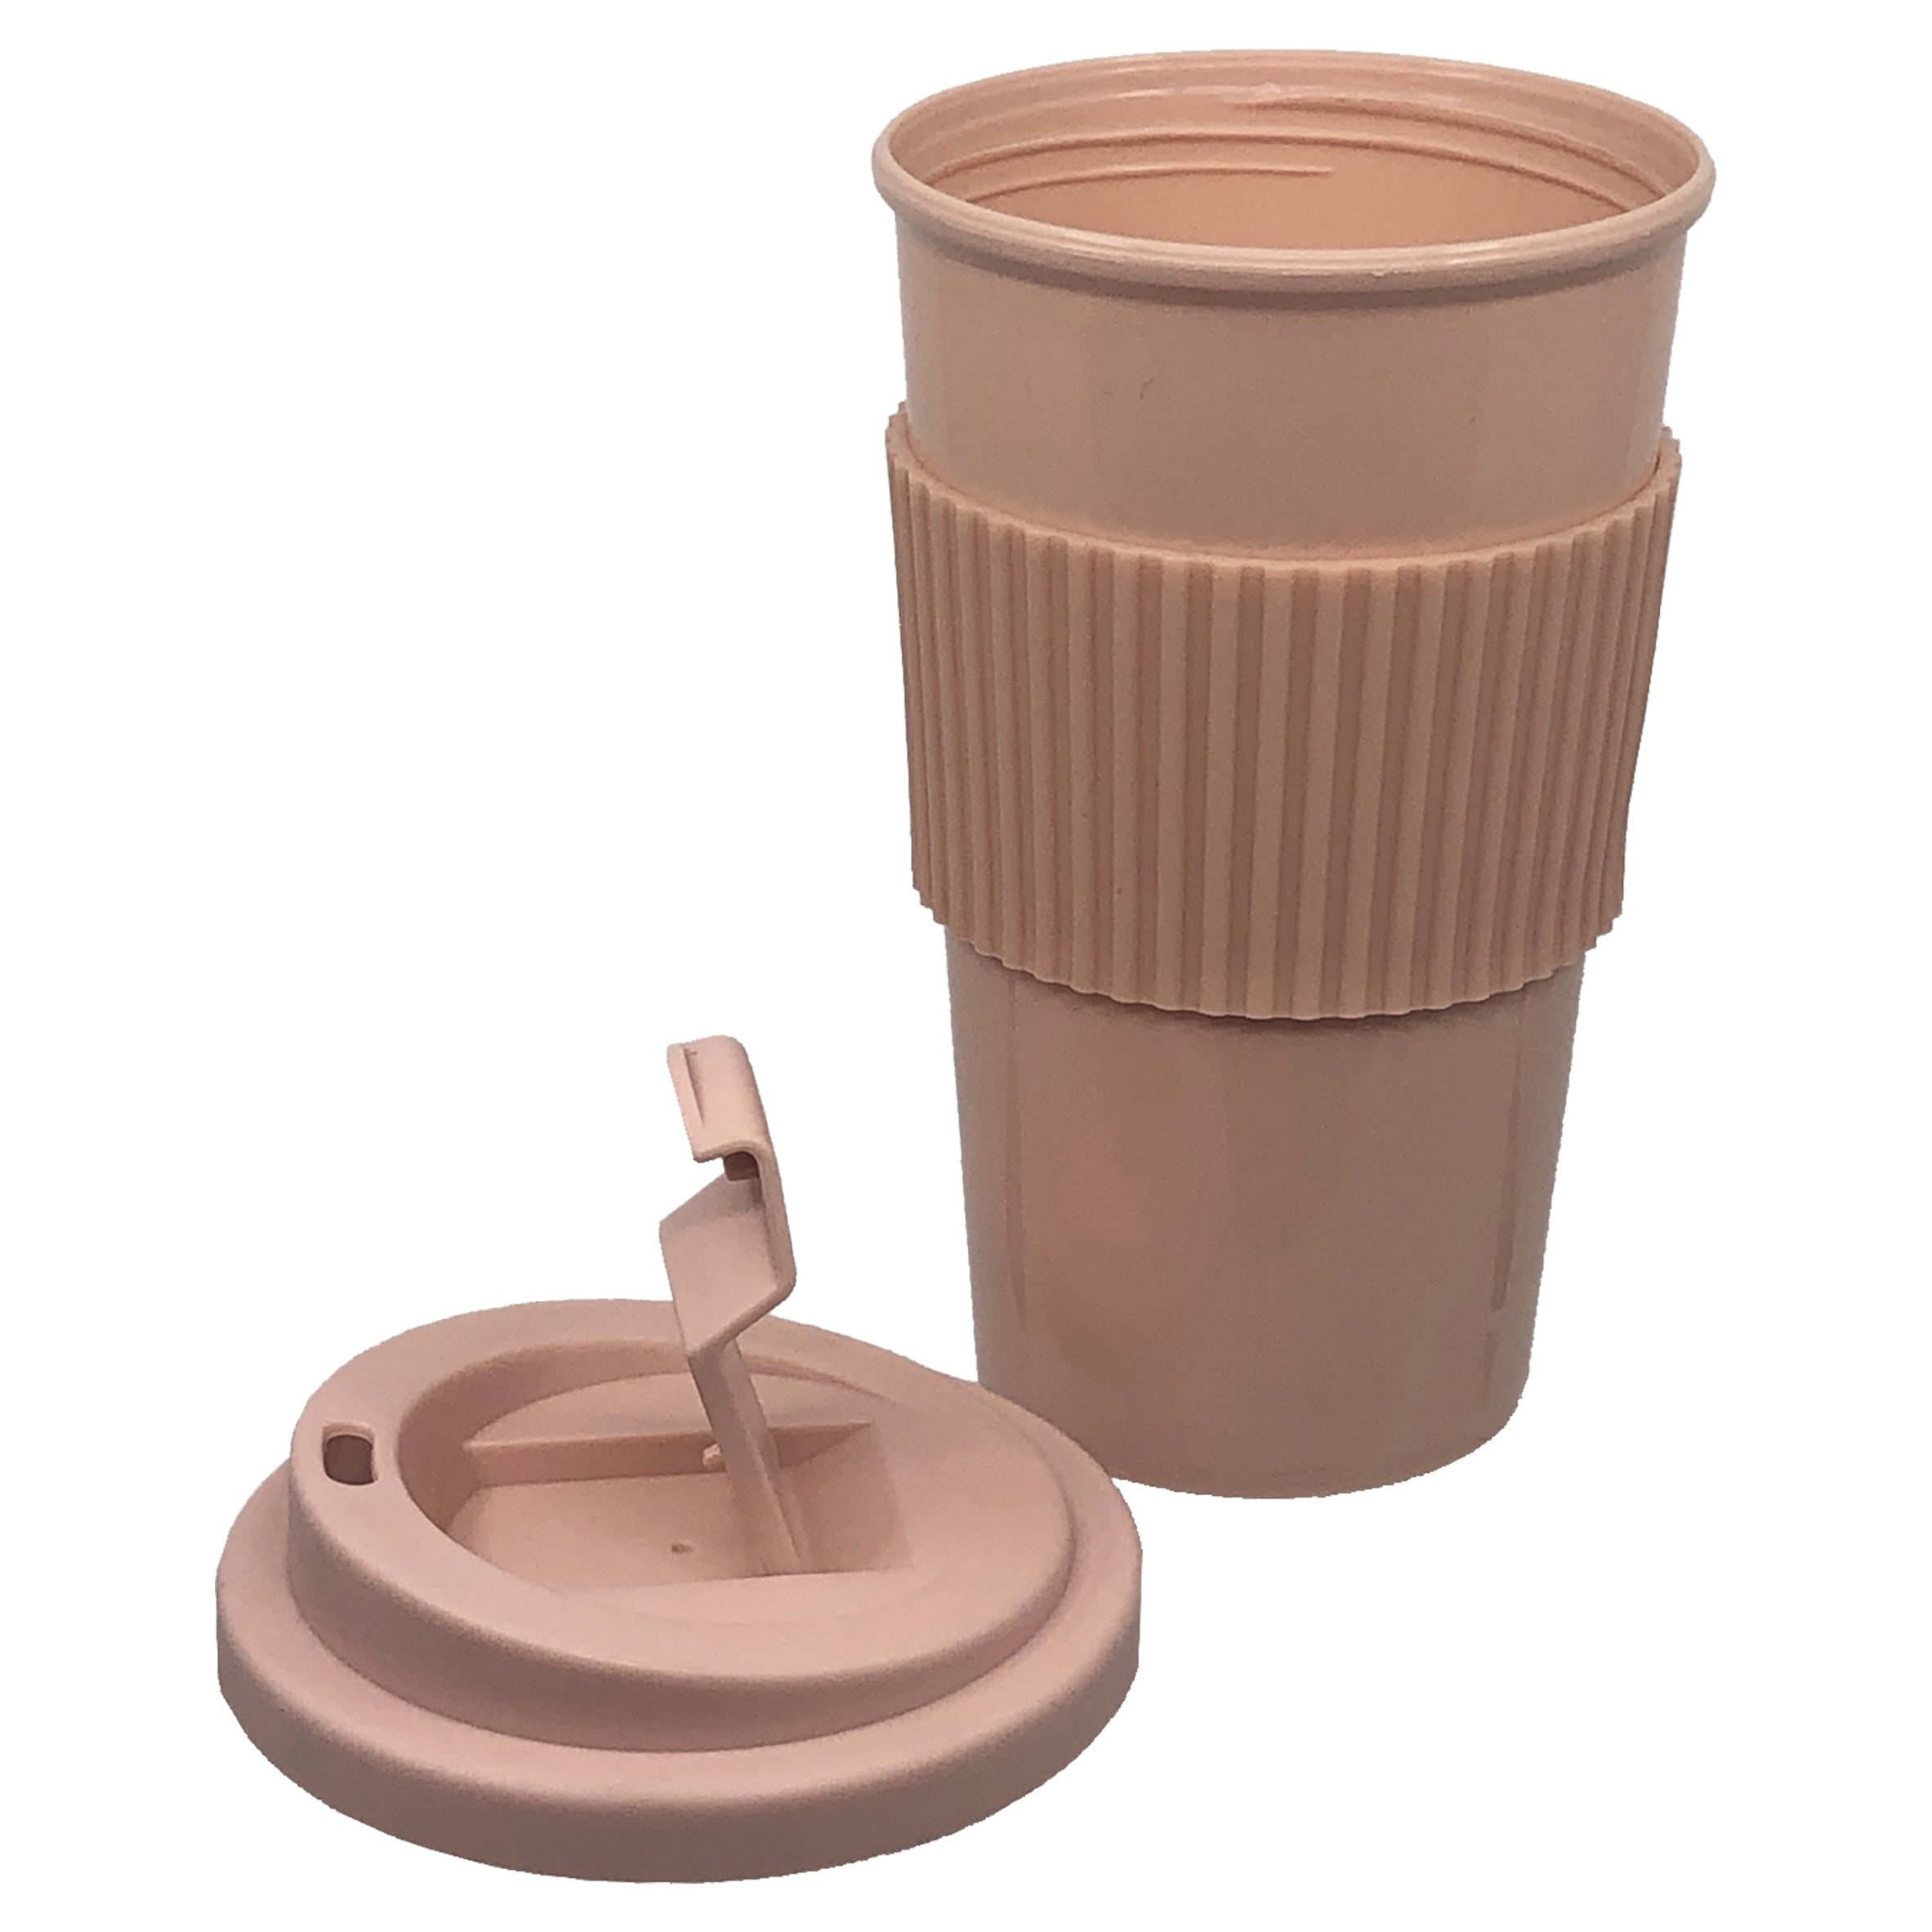 Mug To Go Tasty – Mint Color (No Handle, Protective Sleeve)